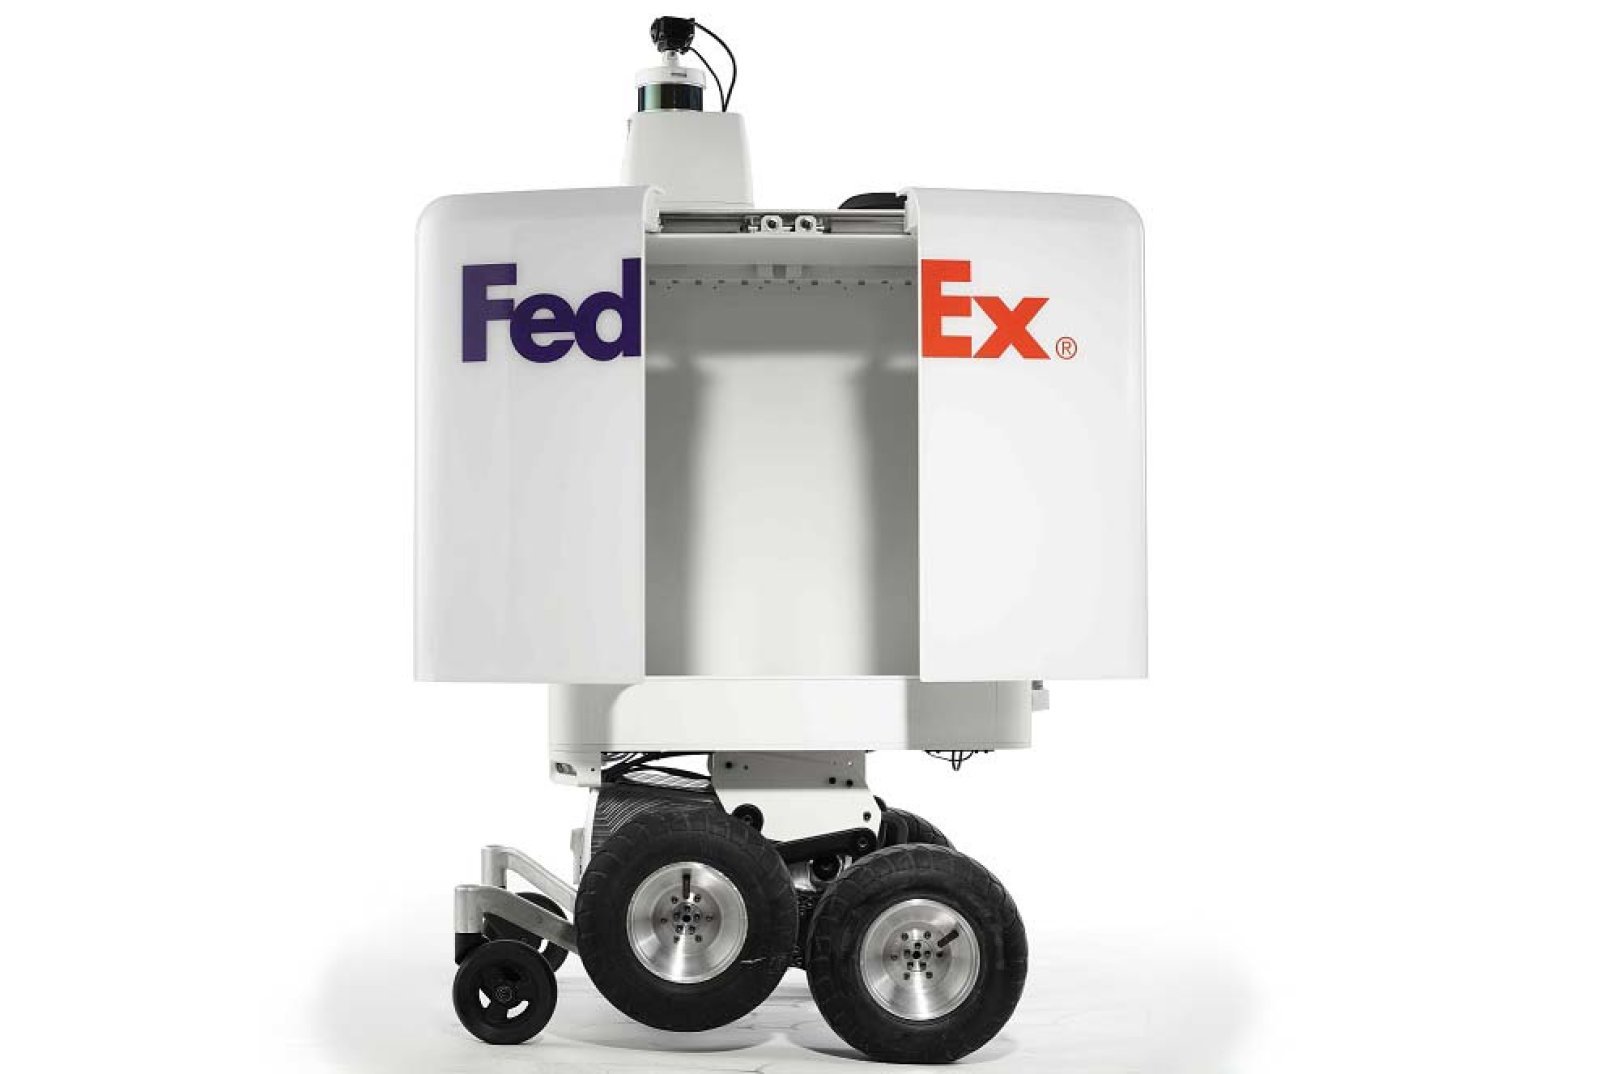 fedex-delivery-robot-trials